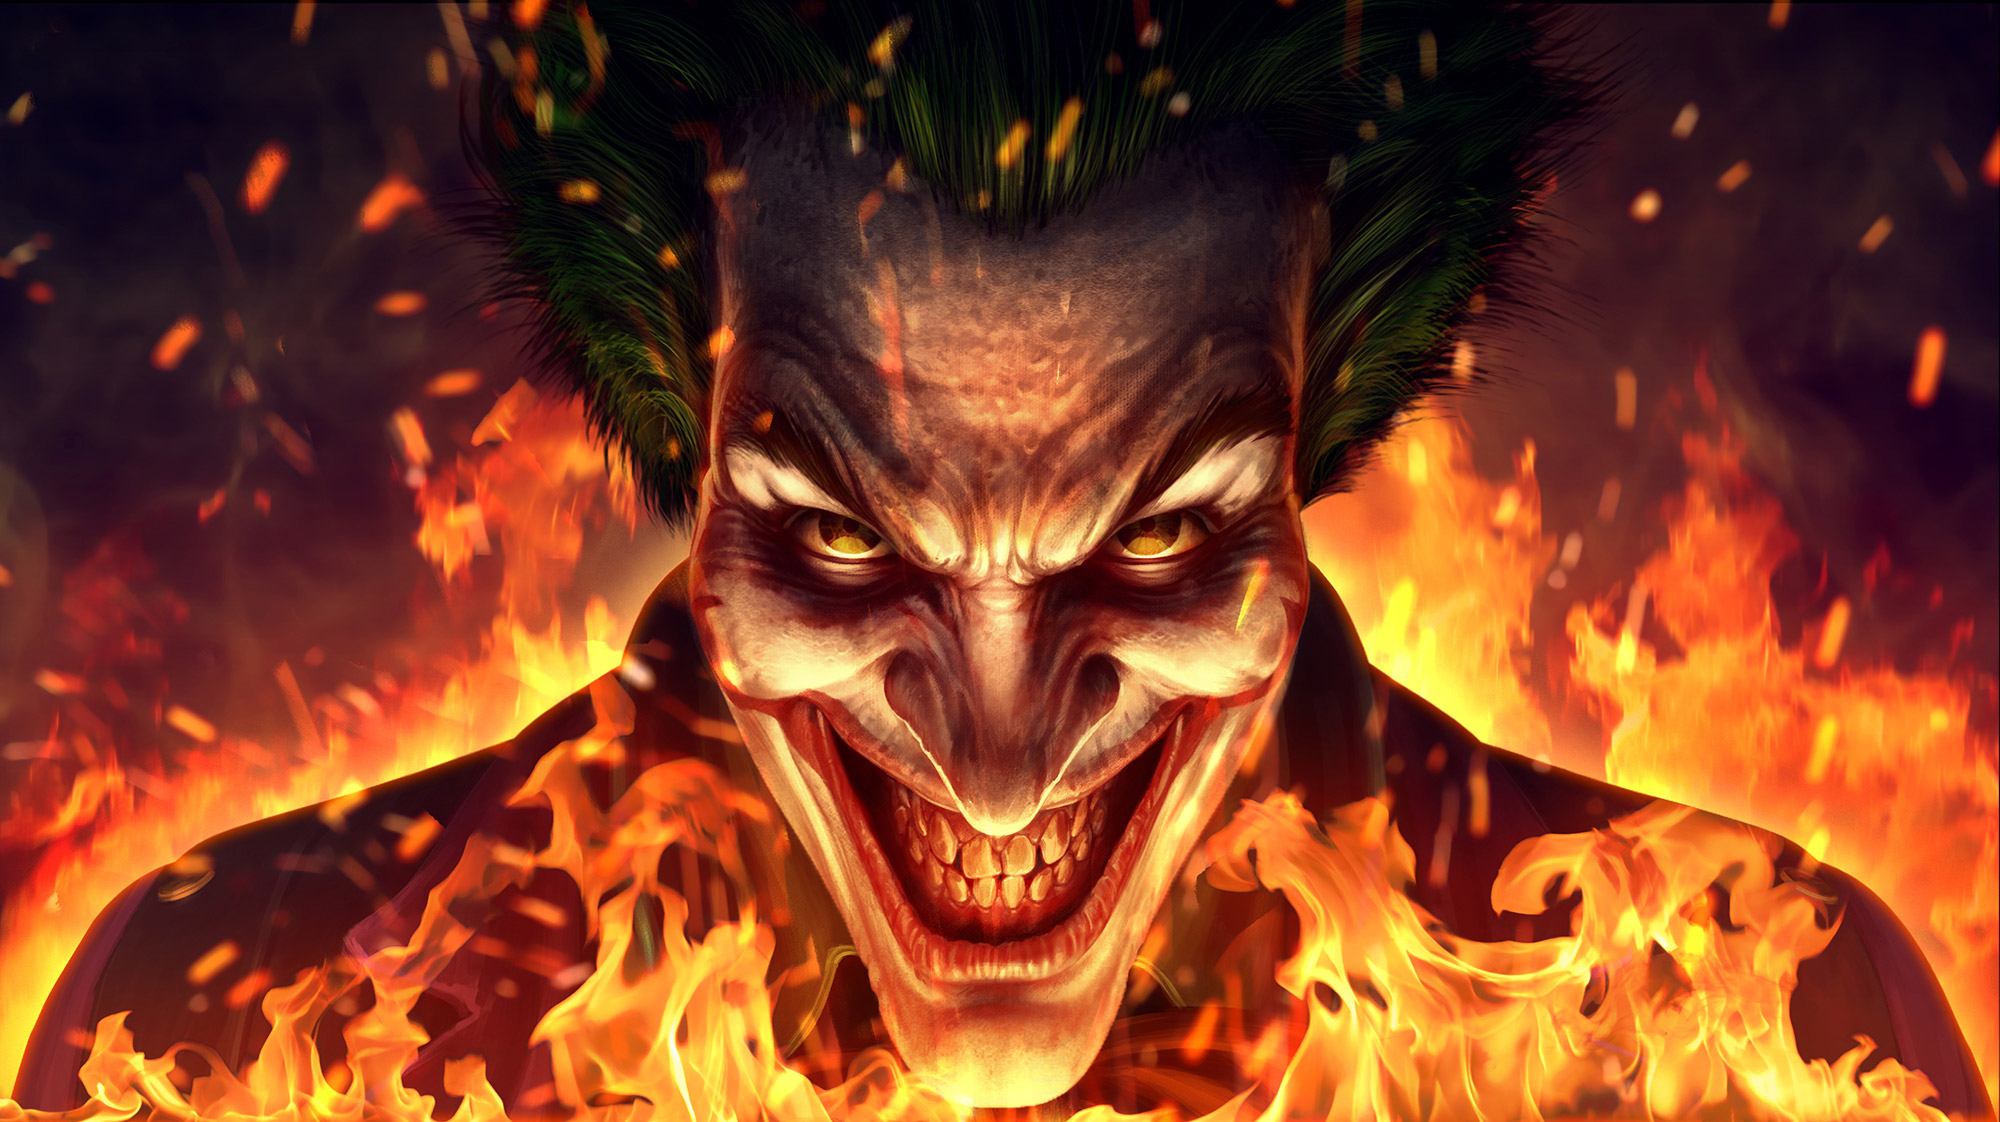 General 2000x1122 artwork digital art Joker fictional character face smiling fire cropped